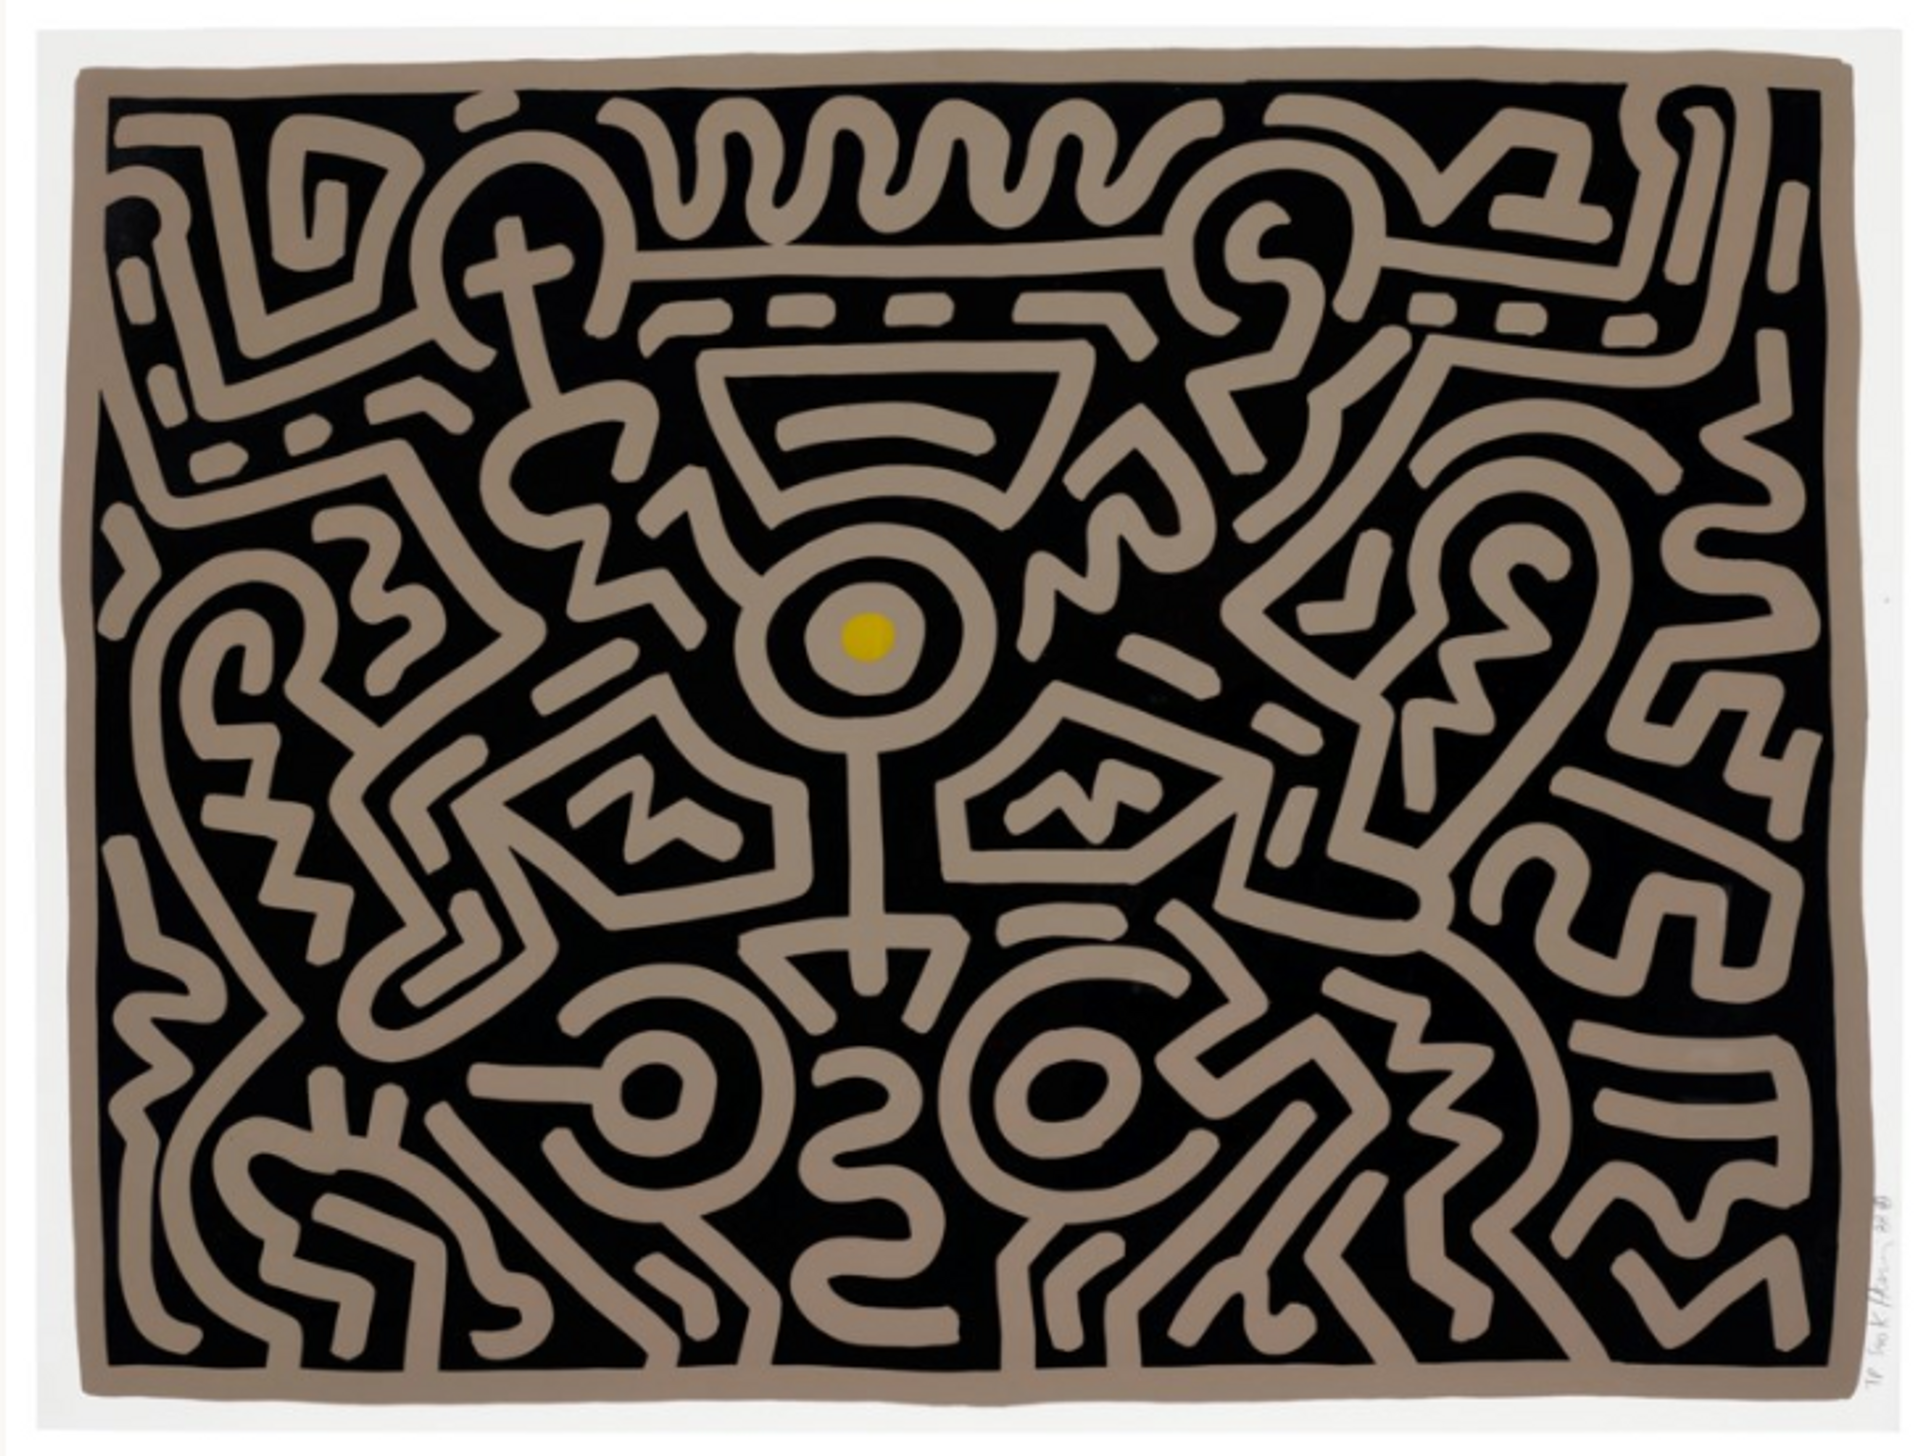 Growing 3 (TP) by Keith Haring 1988 - MyArtBroker 